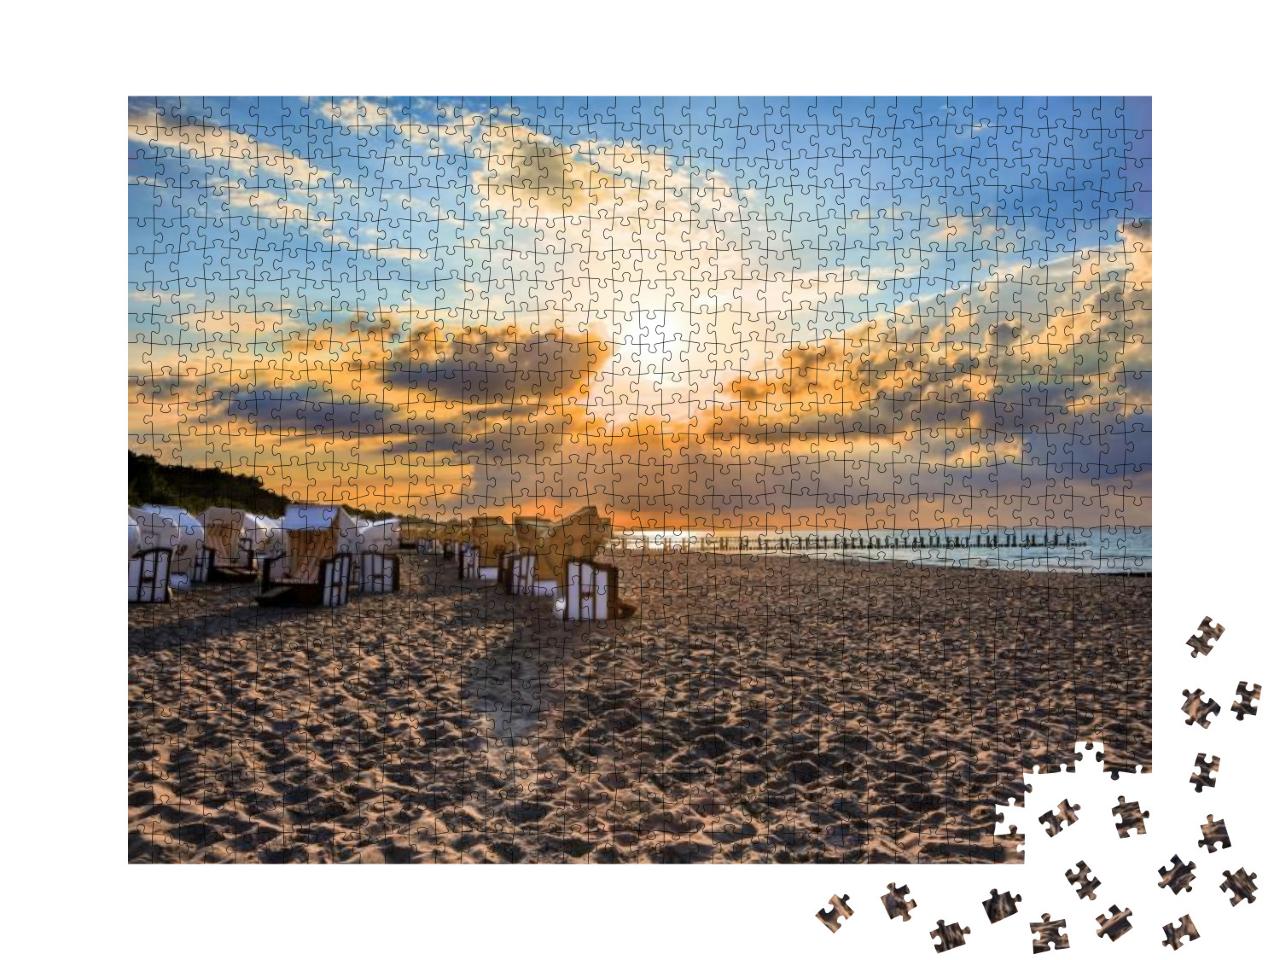 Puzzle 1000 Teile „Farbenfroher Sonnenuntergang am Strand, blauer Himmel, Meer“